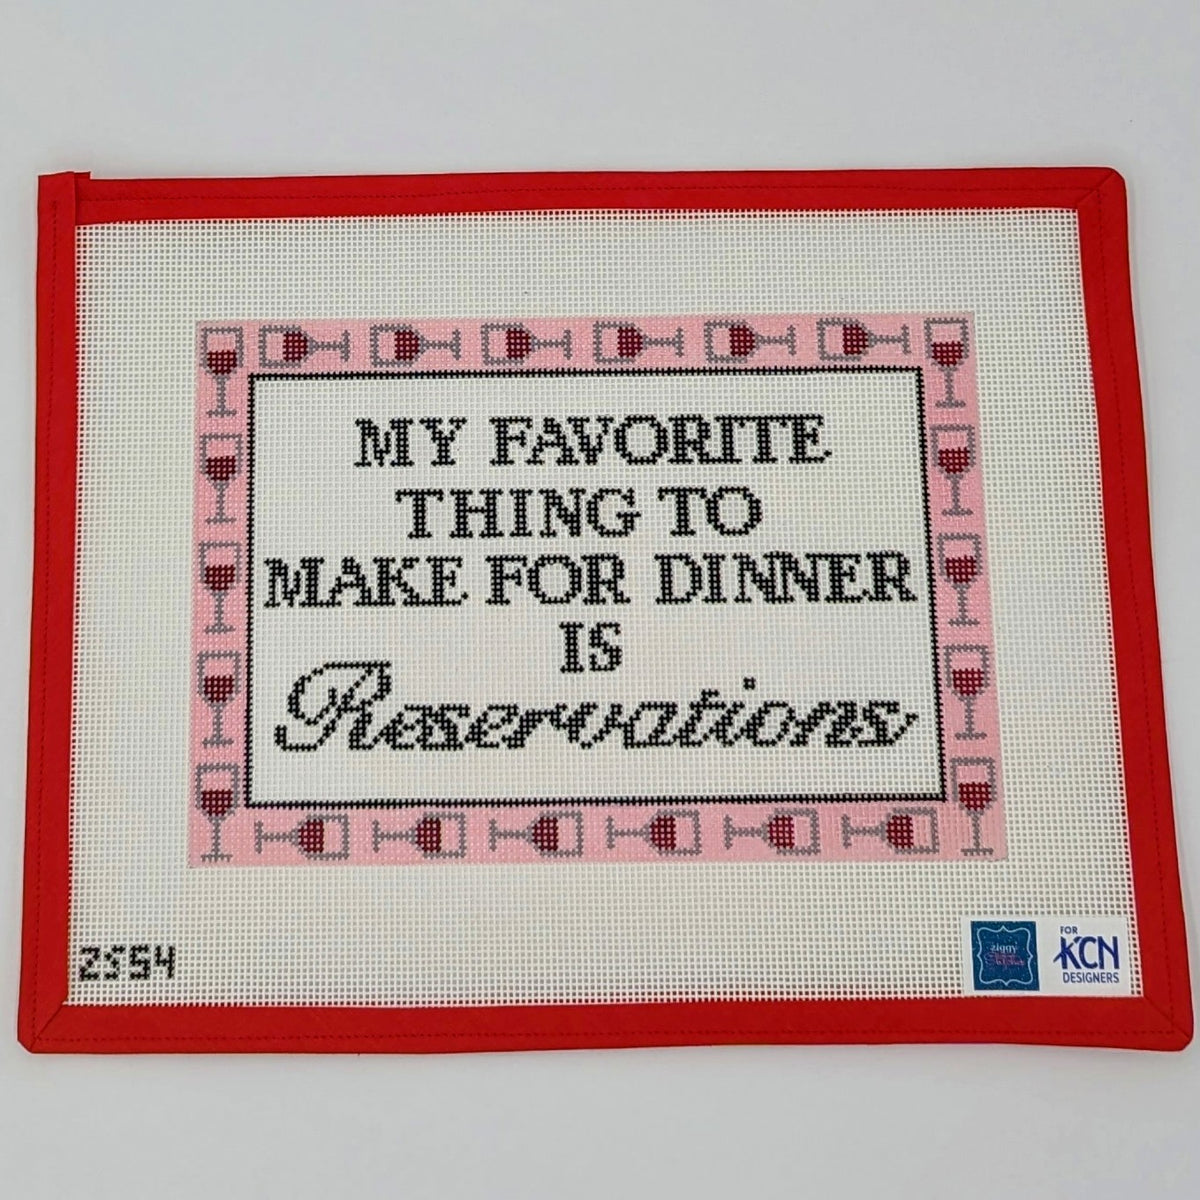 Dinner/Reservations